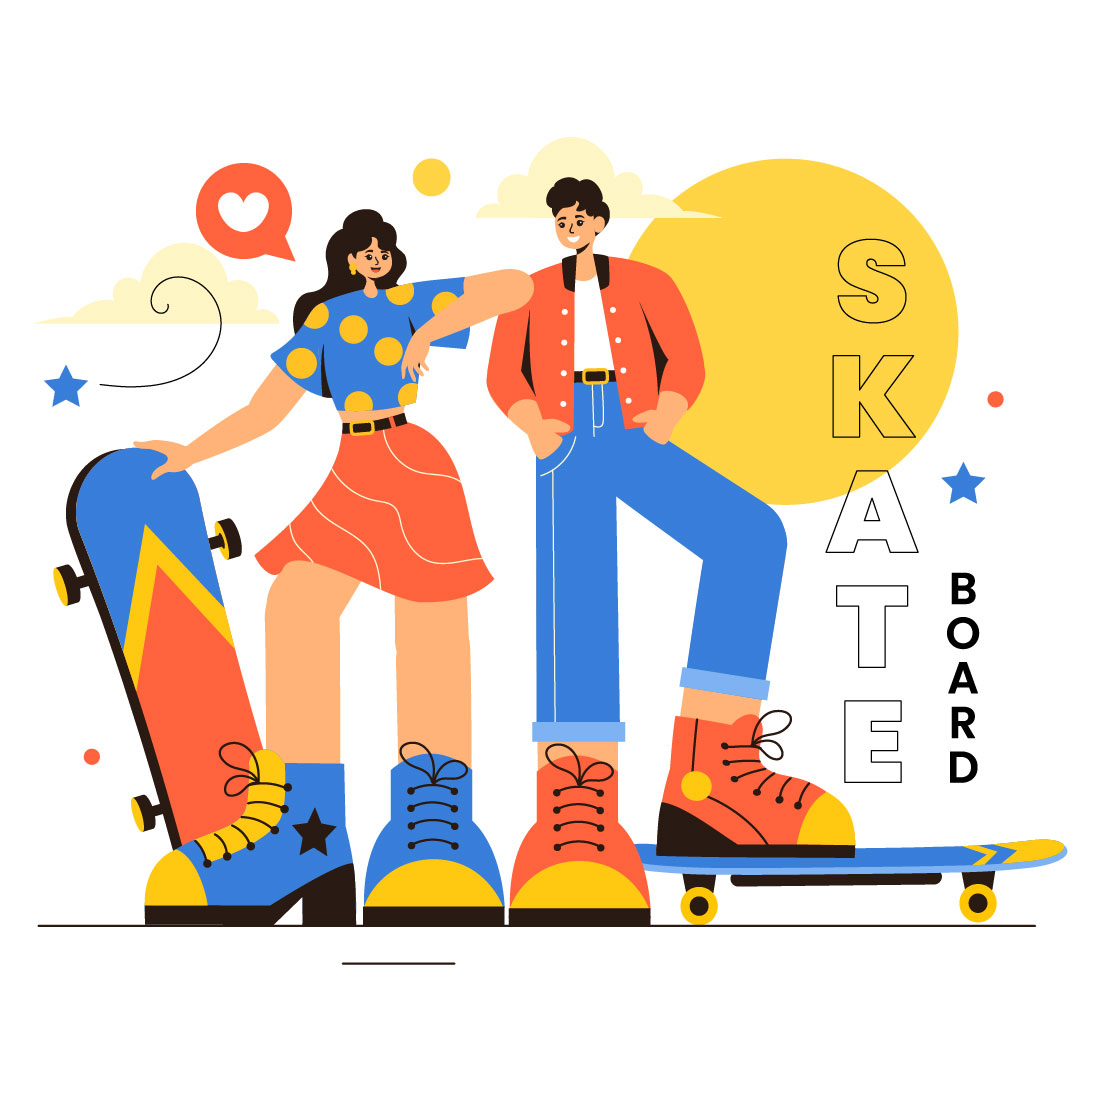 13 Skateboard Sport Illustration cover image.